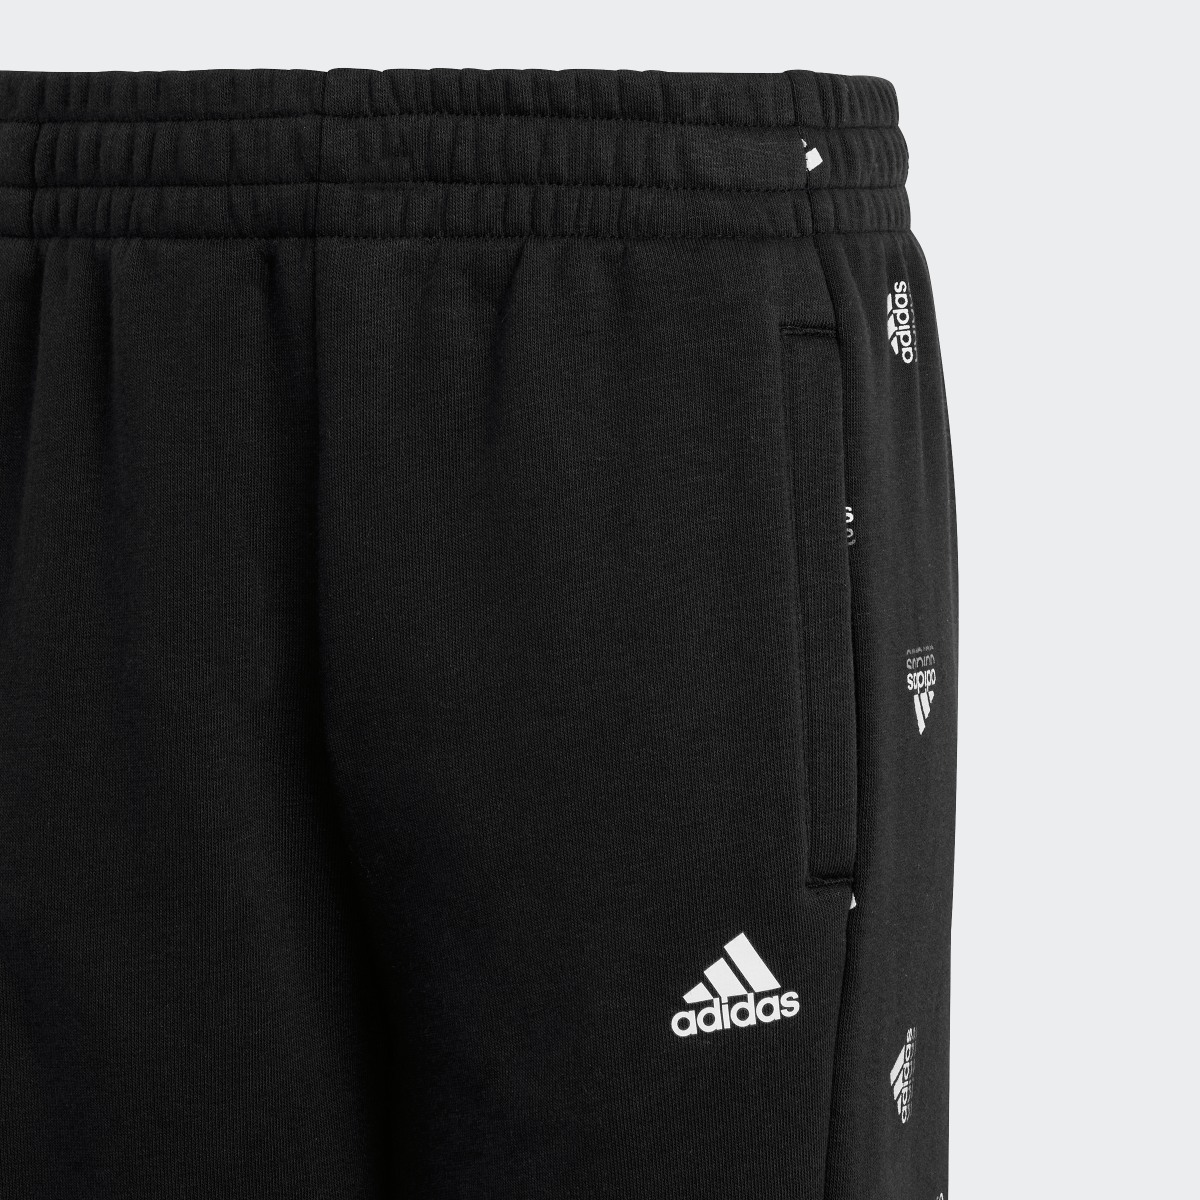 Adidas Brand Love Side Insert Print Pants. 5